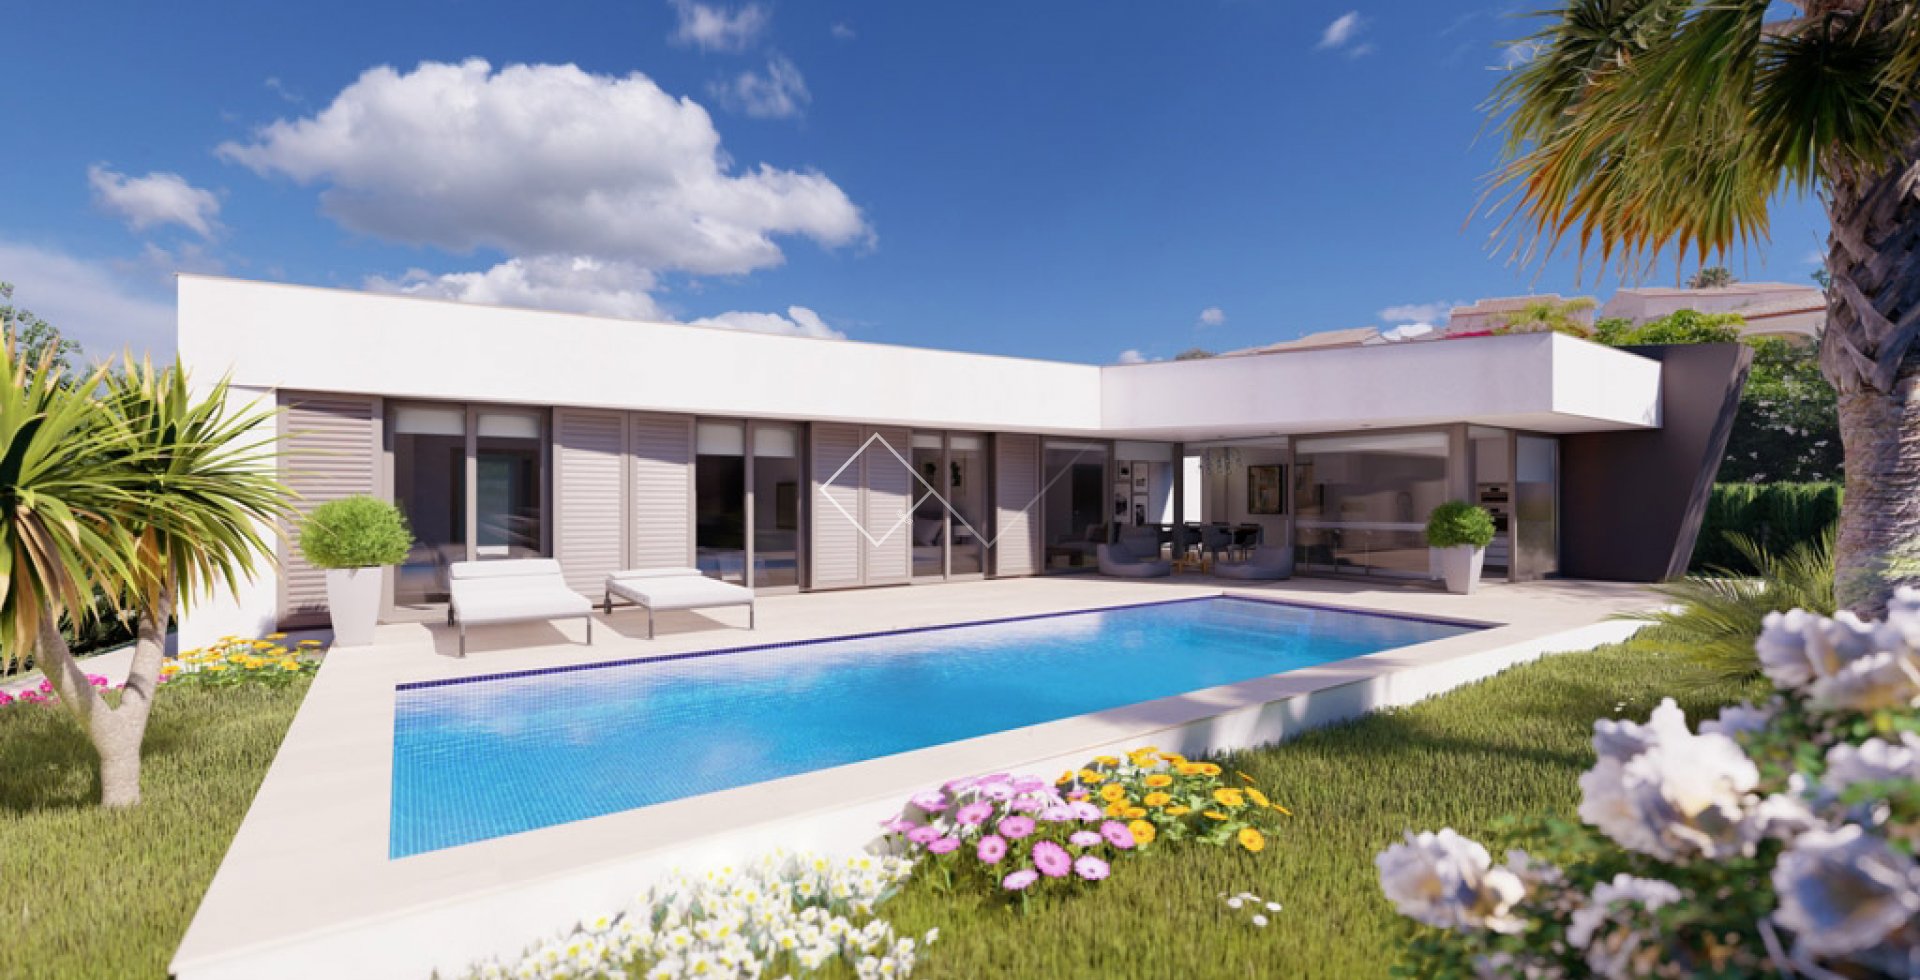 Ibiza stijl villa met zwembad - Modern huis project in Gran Sol, Calpe